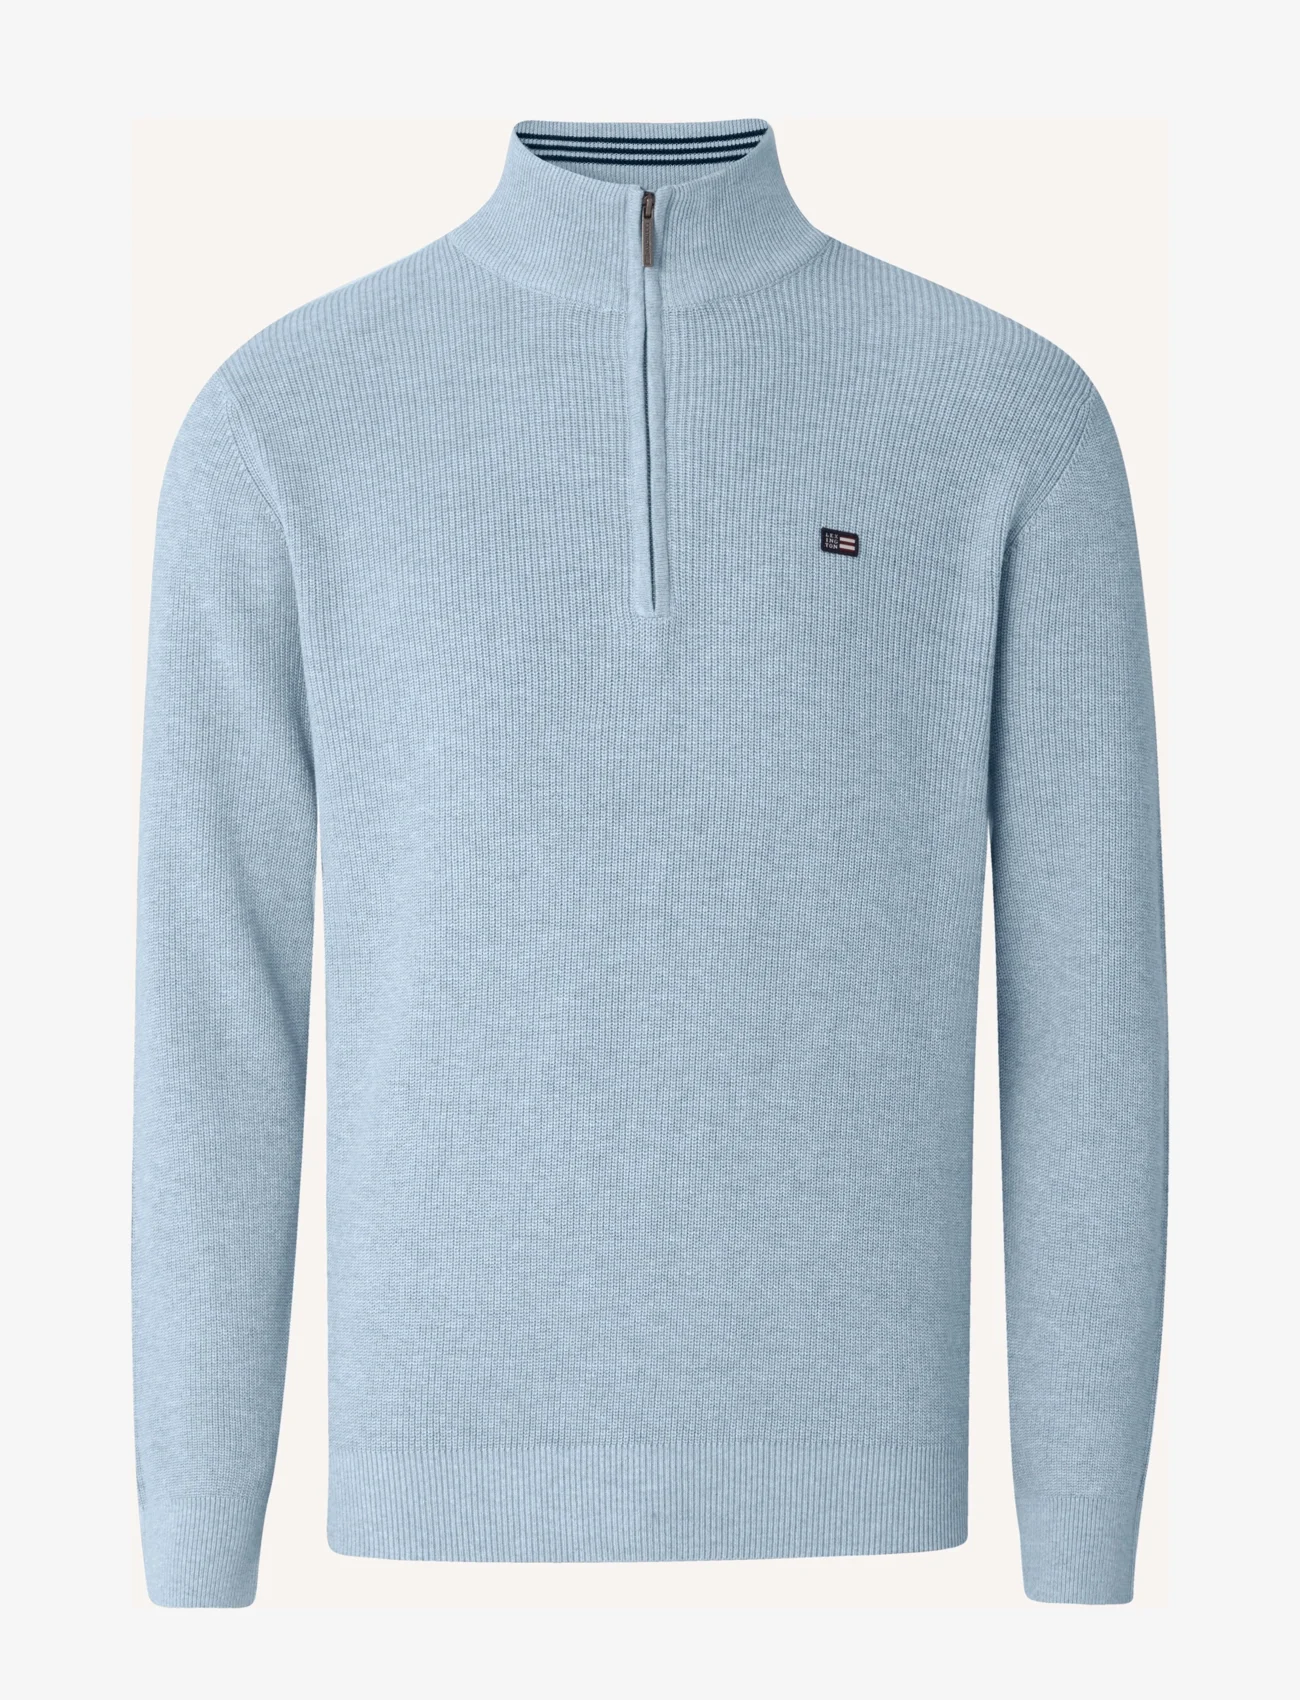 Lexington Clothing - Clay Cotton Half-Zip Sweater - heren - light blue - 0